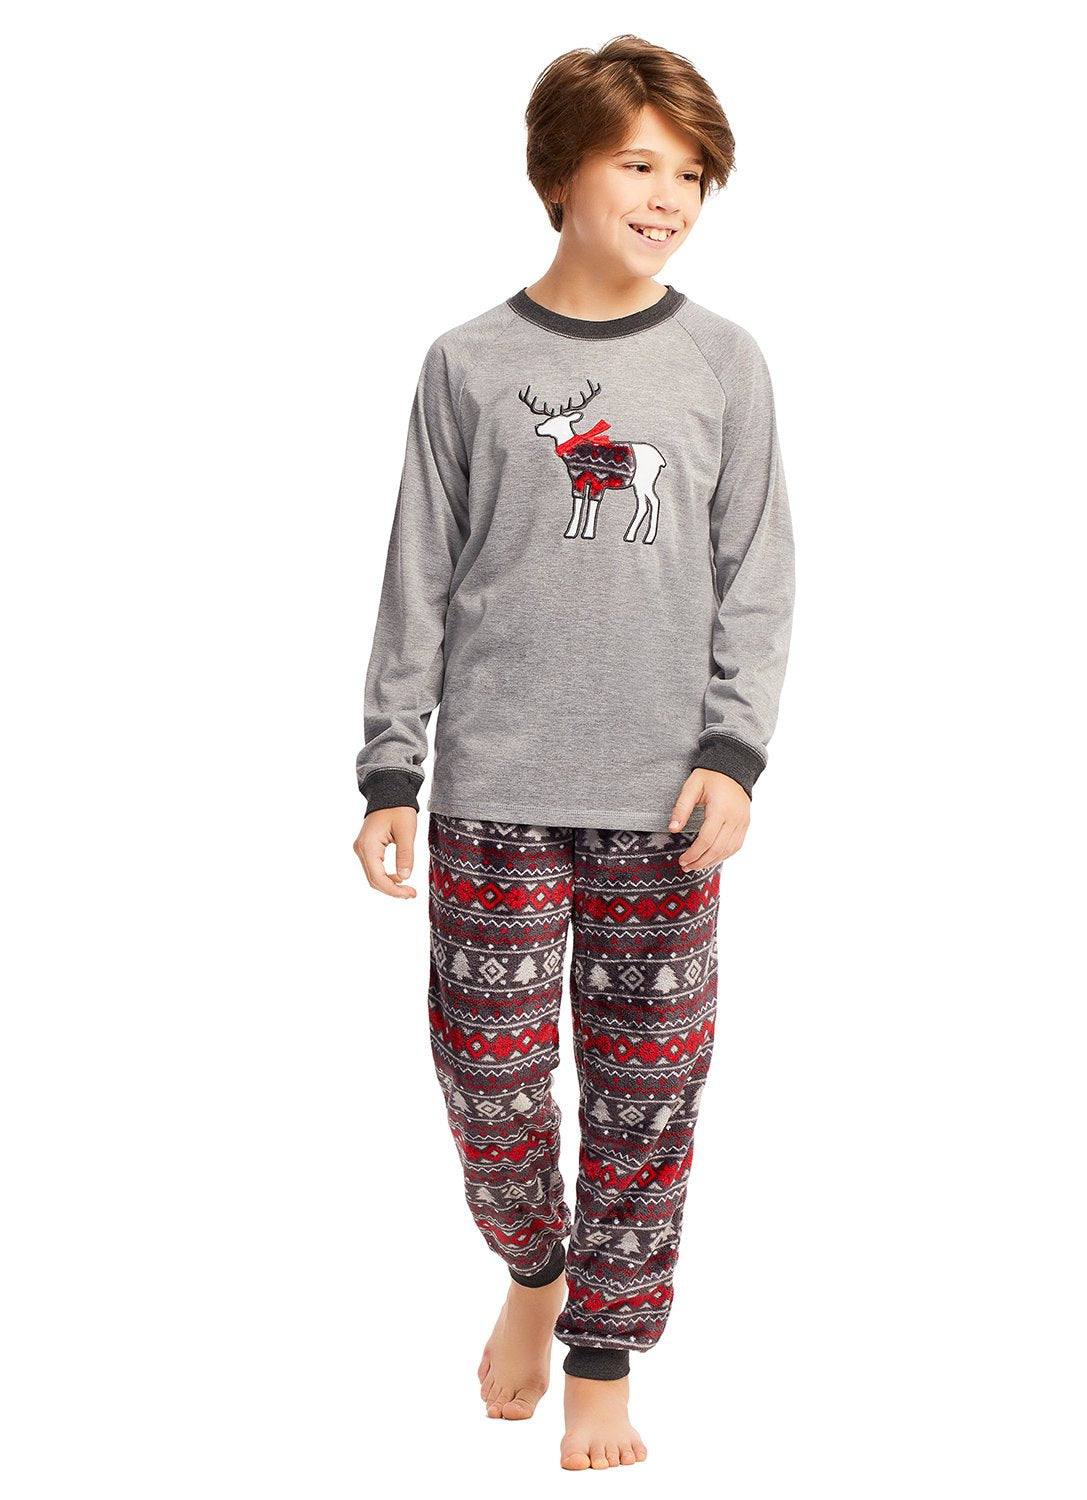 Boys Grey Deer Family Sleepwear Pajama Set